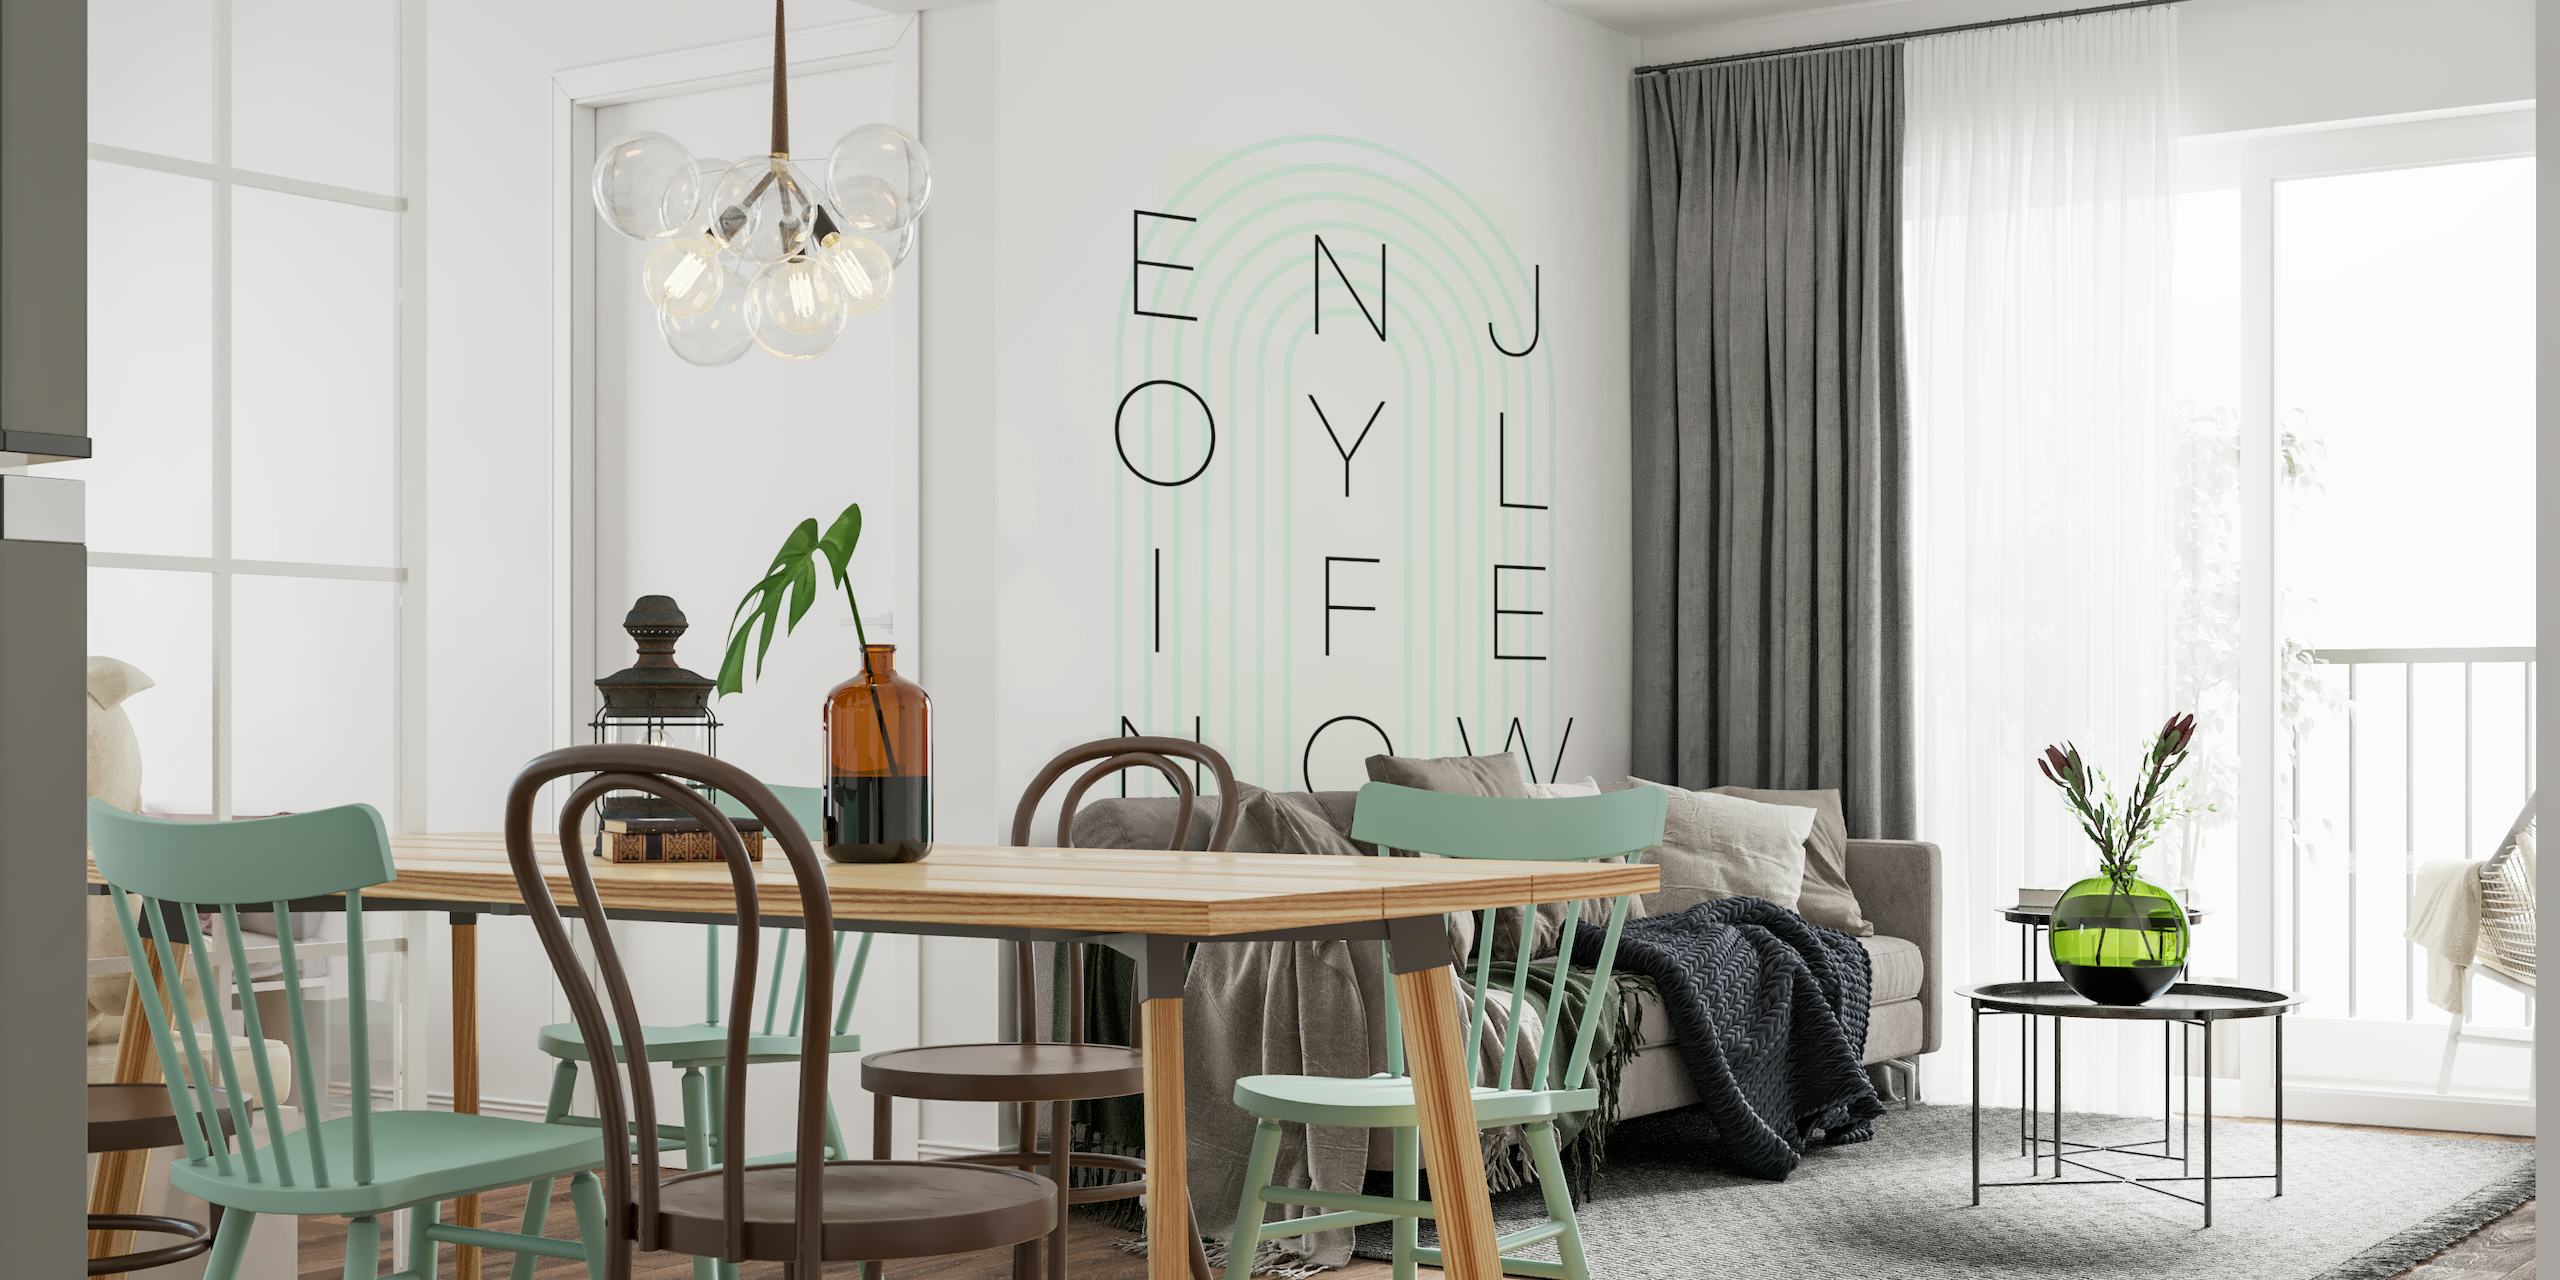 Enjoy life now - turquoise wallpaper